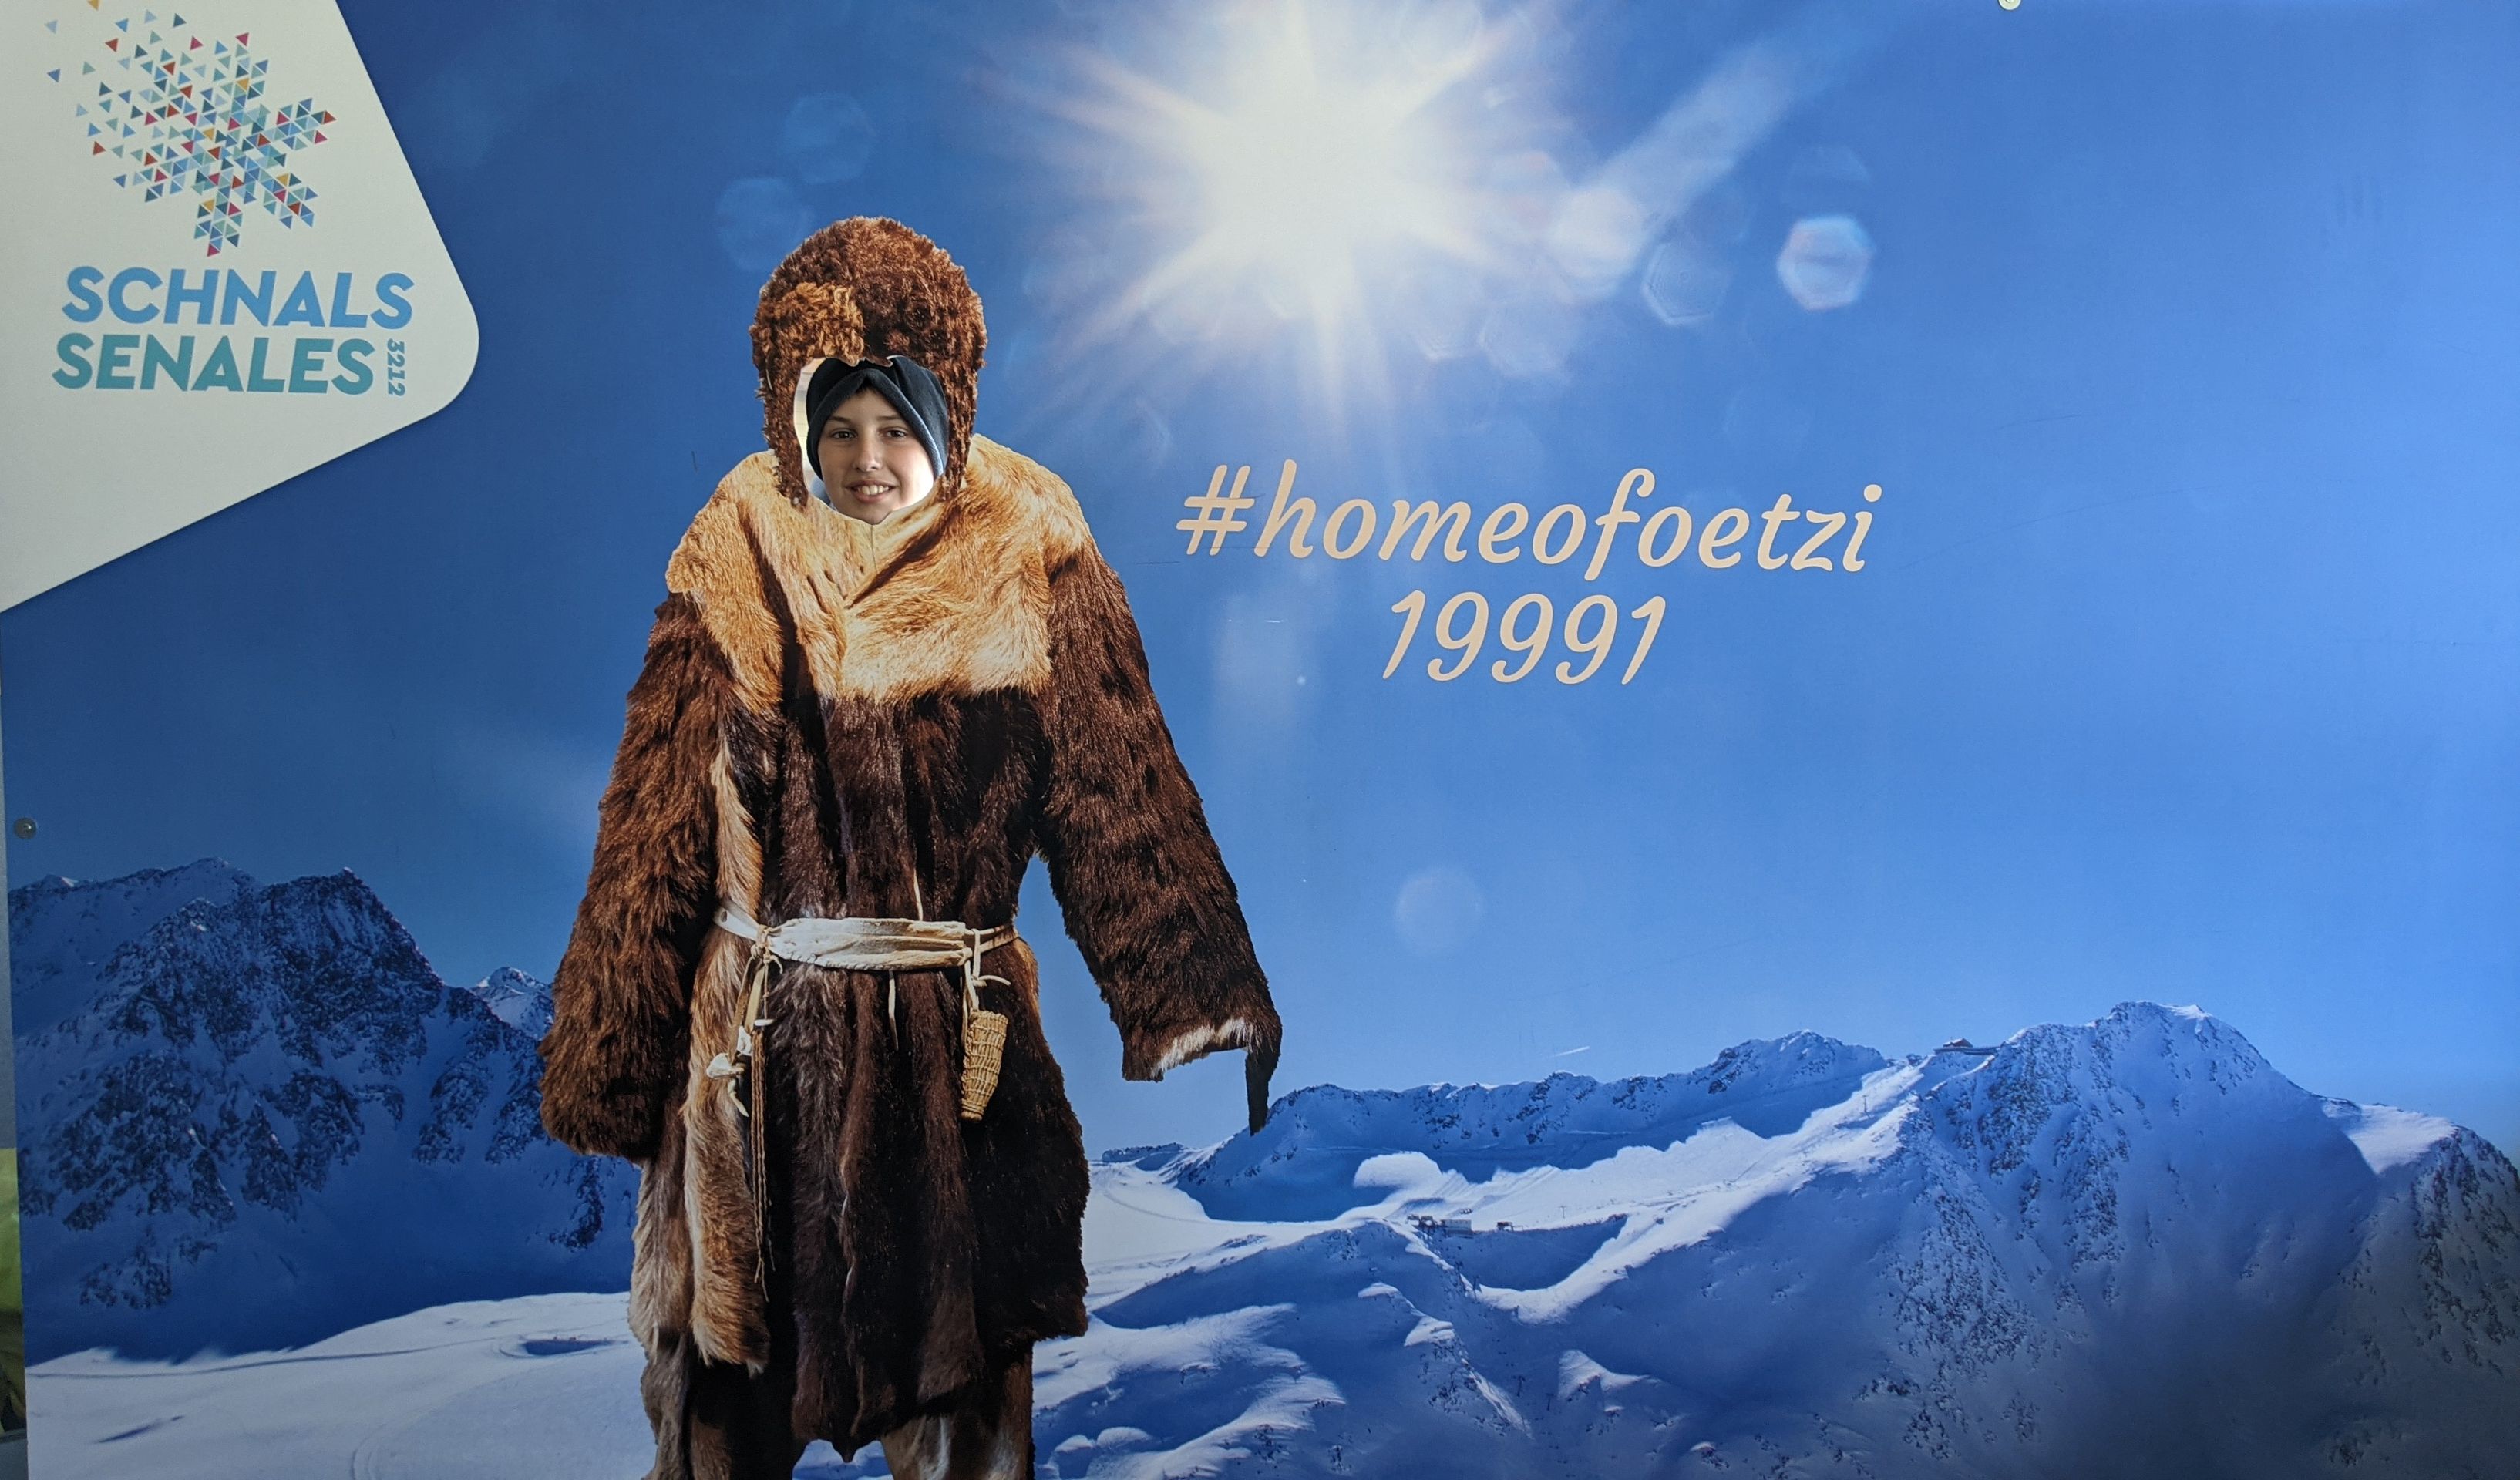 Home of Ötzi 